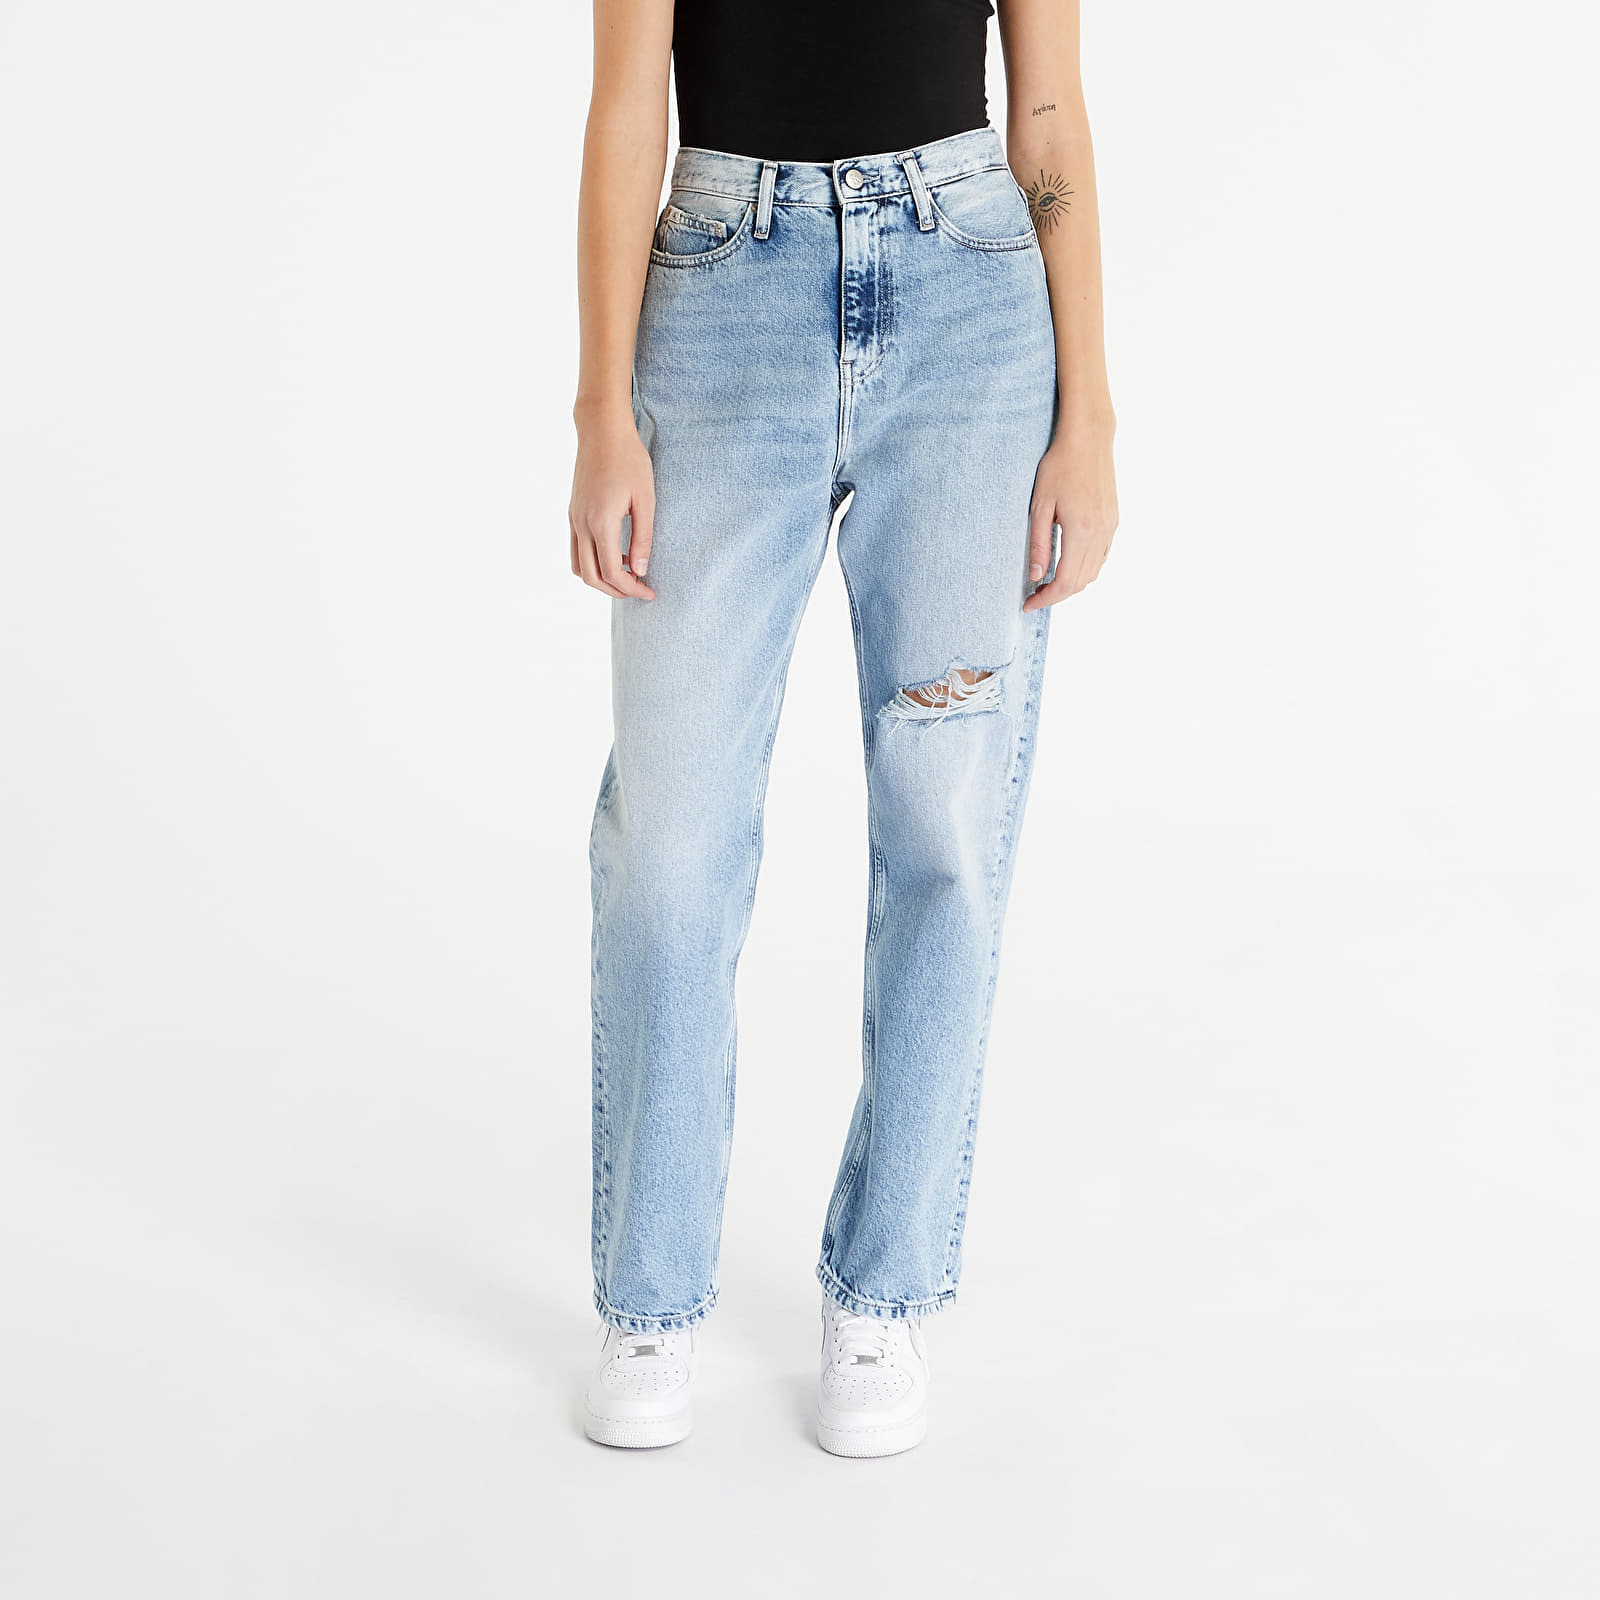 Calvin Klein - jeans high rise straight pants denim light